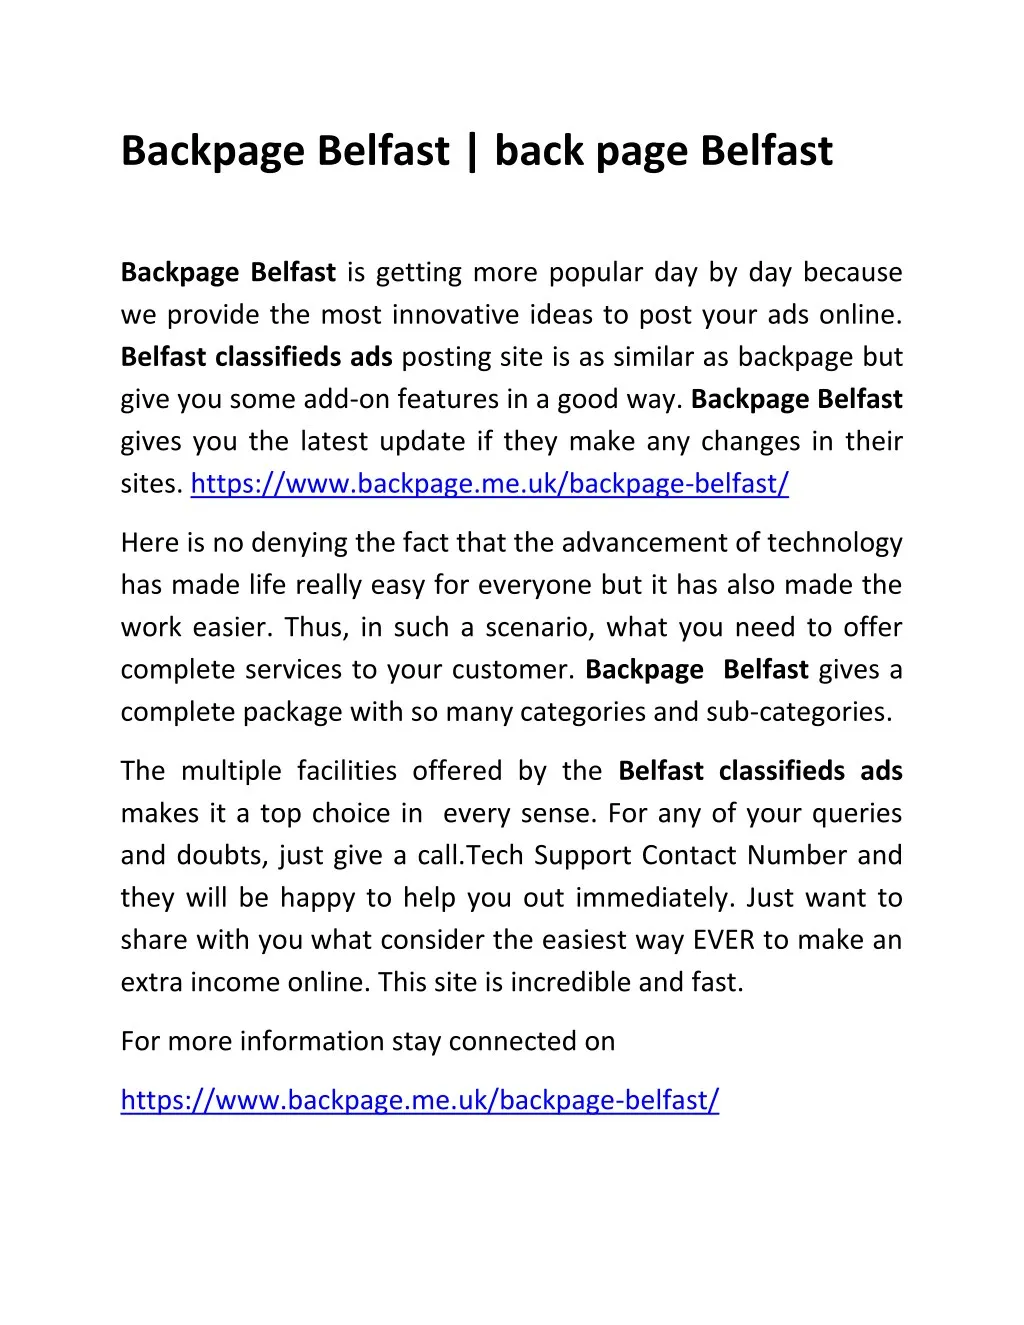 backpage belfast back page belfast